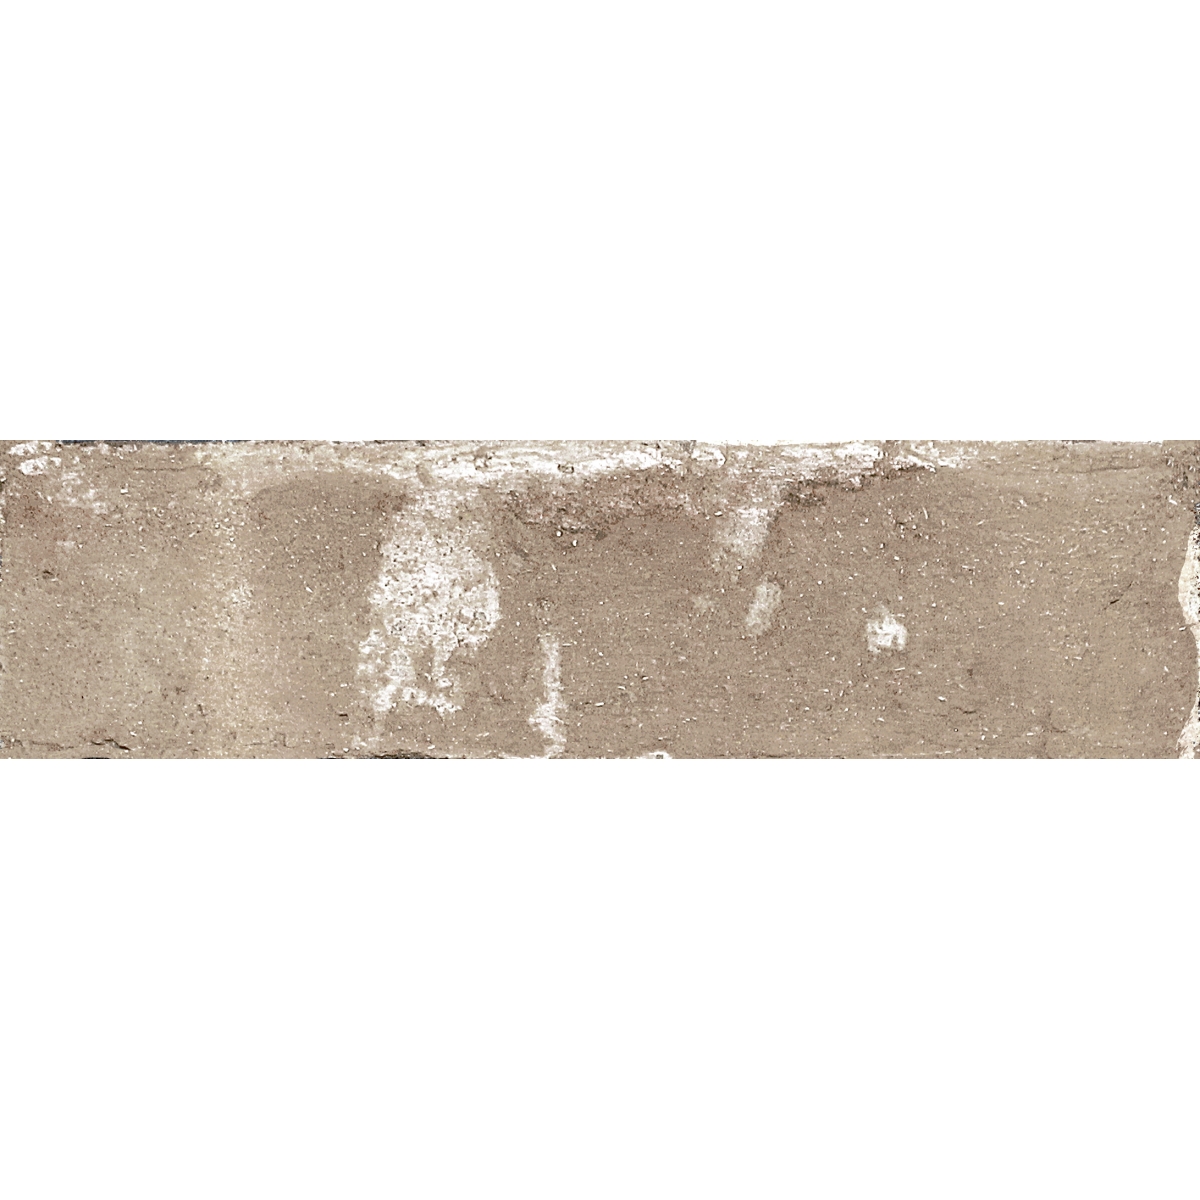 Pamesa Cerámicas - Coleção BrickWall da Pamesa - Brickwall Sand 7x28 